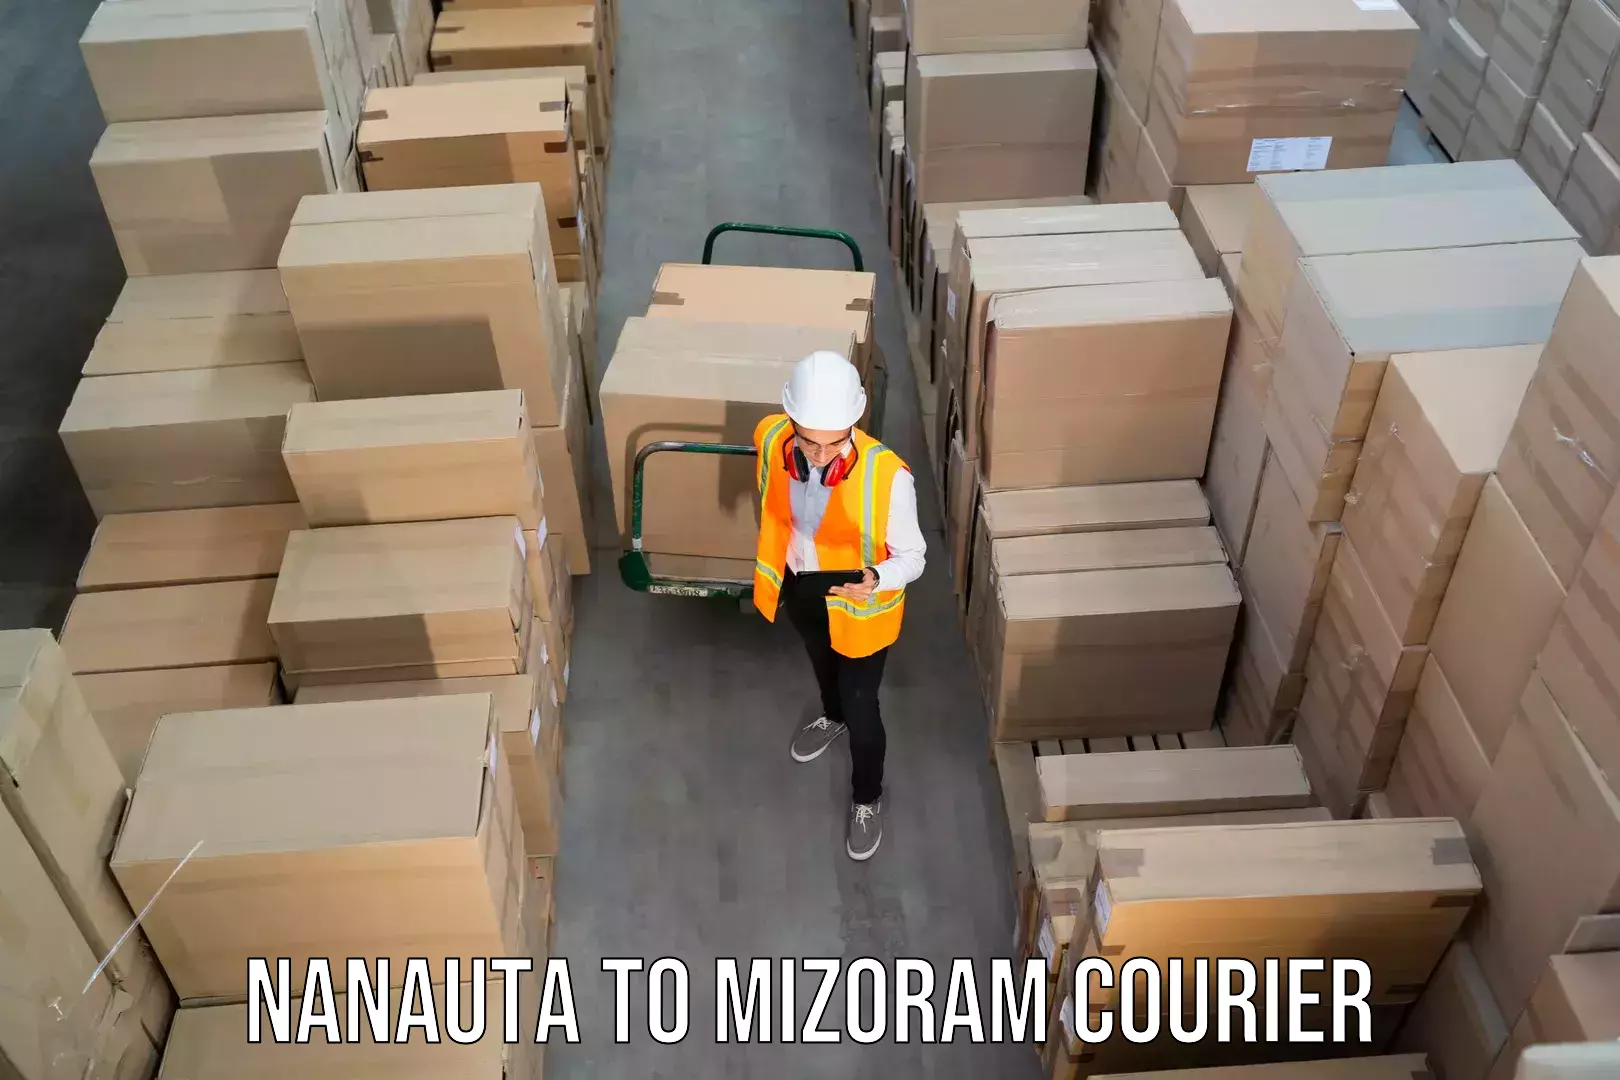 International courier networks Nanauta to Mizoram